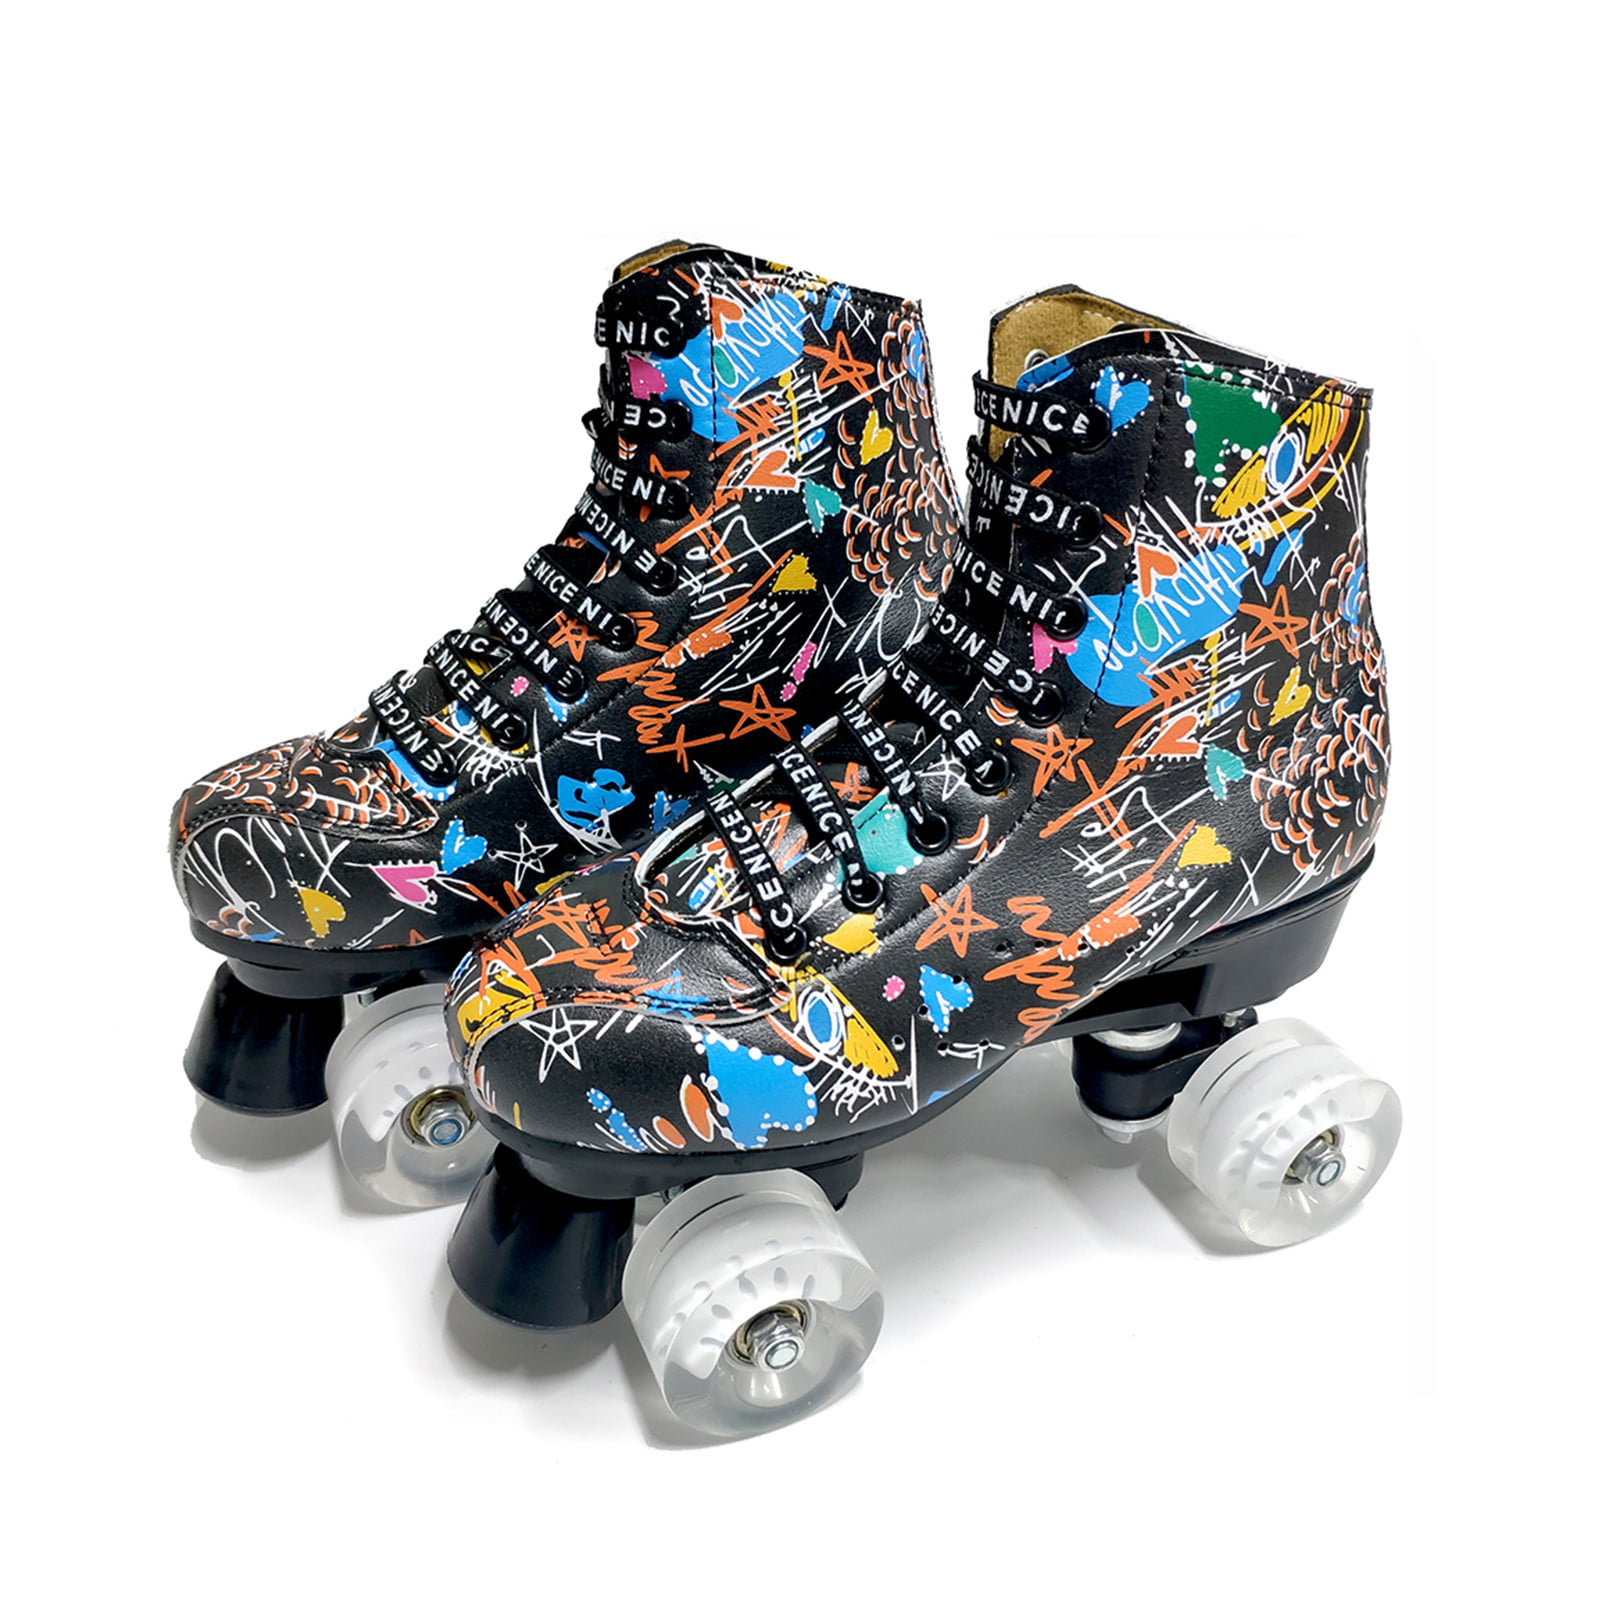 Details about   Kids 4 Wheels Roller Skates Double Row Children Boys Girls Beginner Skates Gifts 